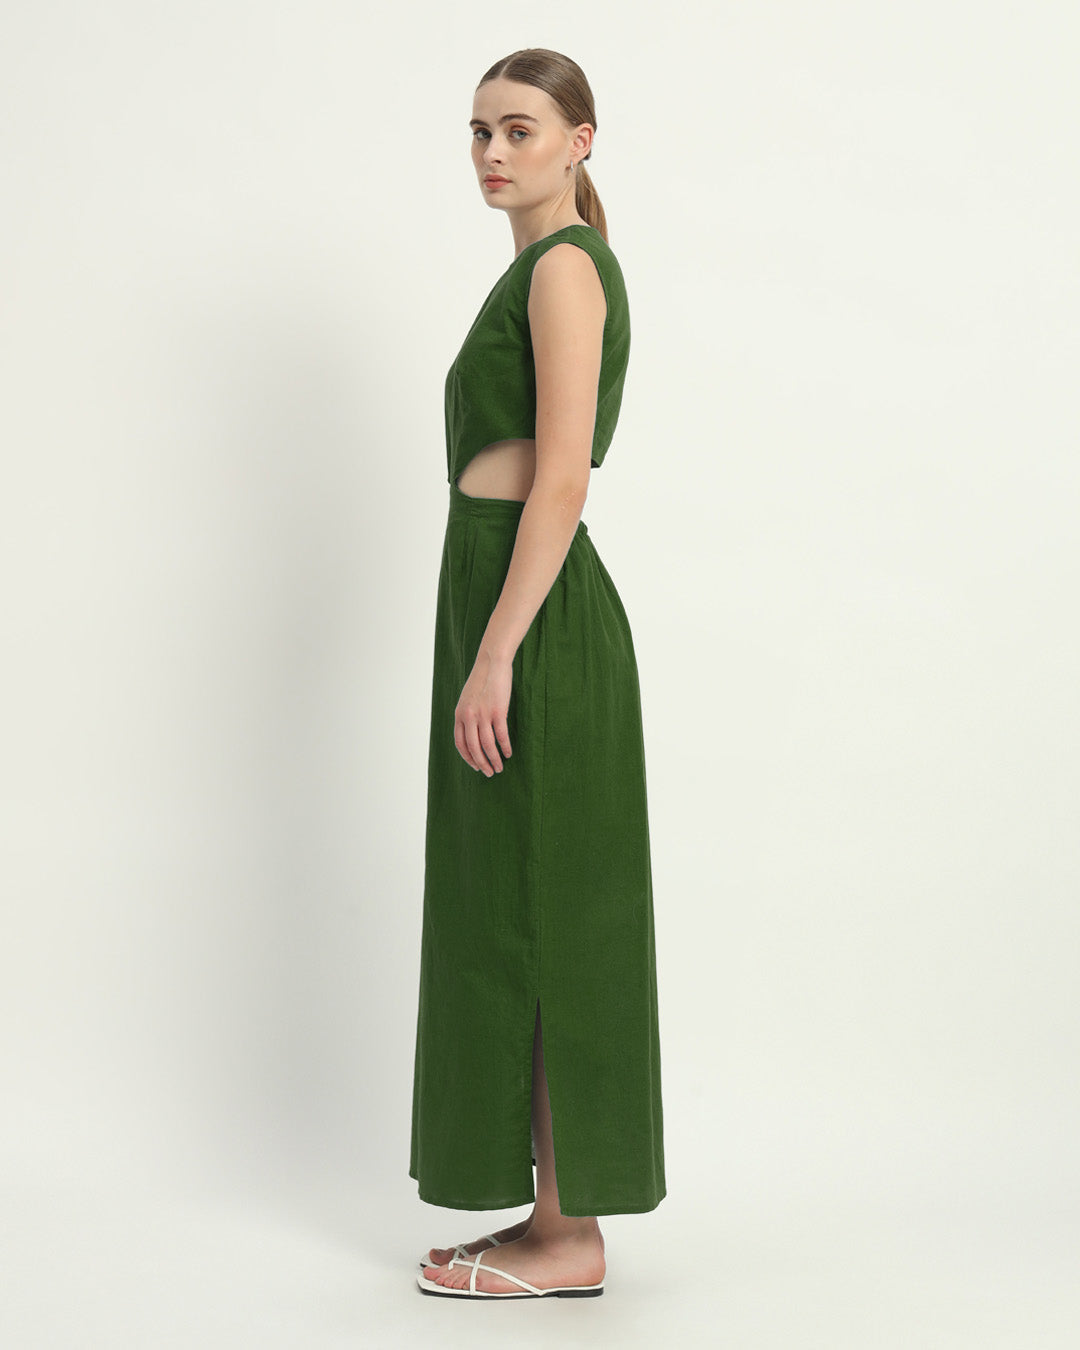 The Emerald Livingston Cotton Dress